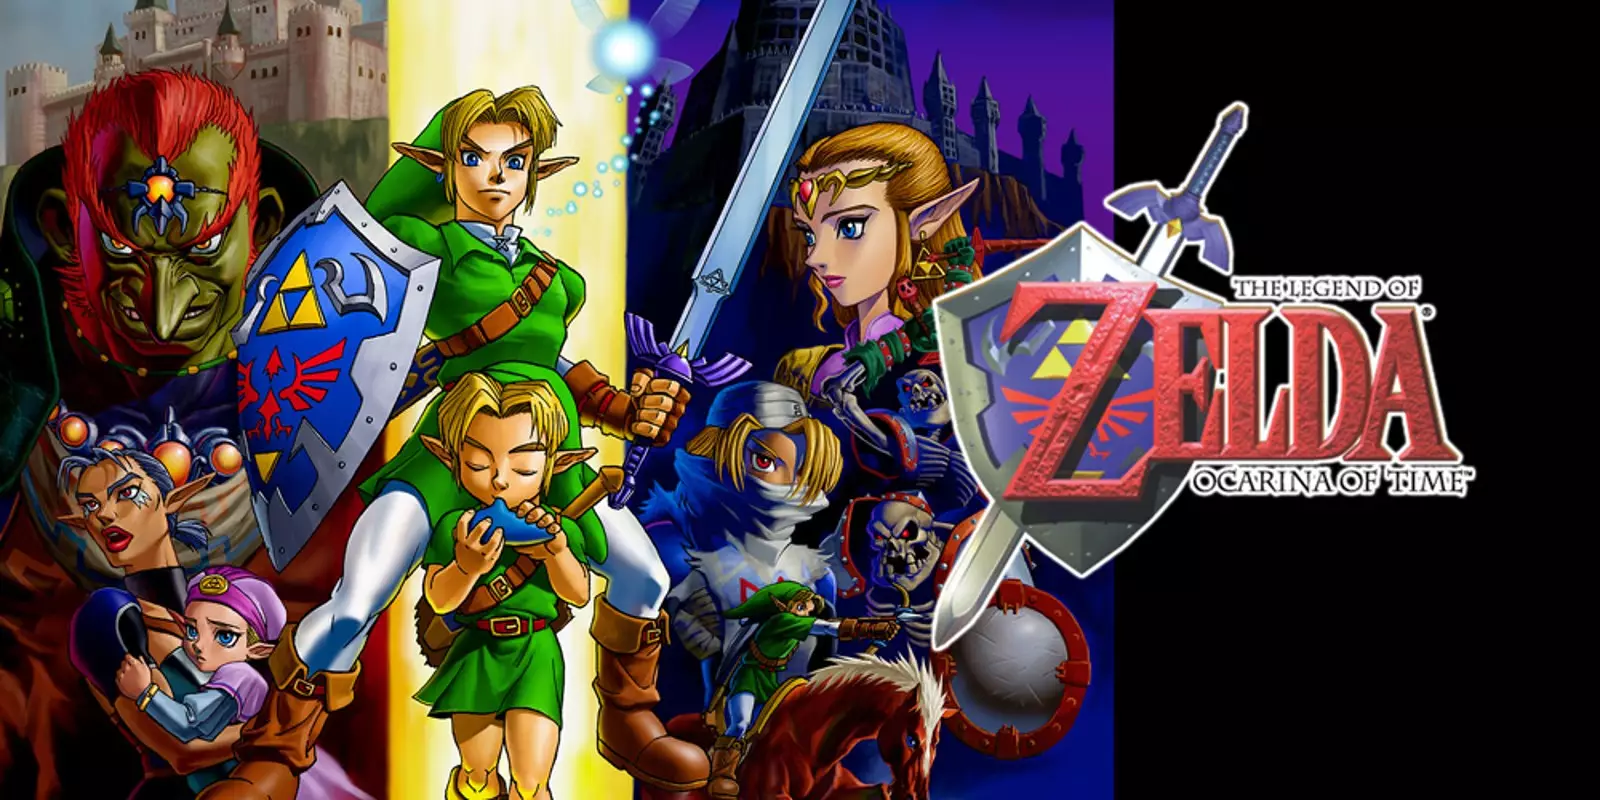 The Legend of Zelda: Ocarina of Time /